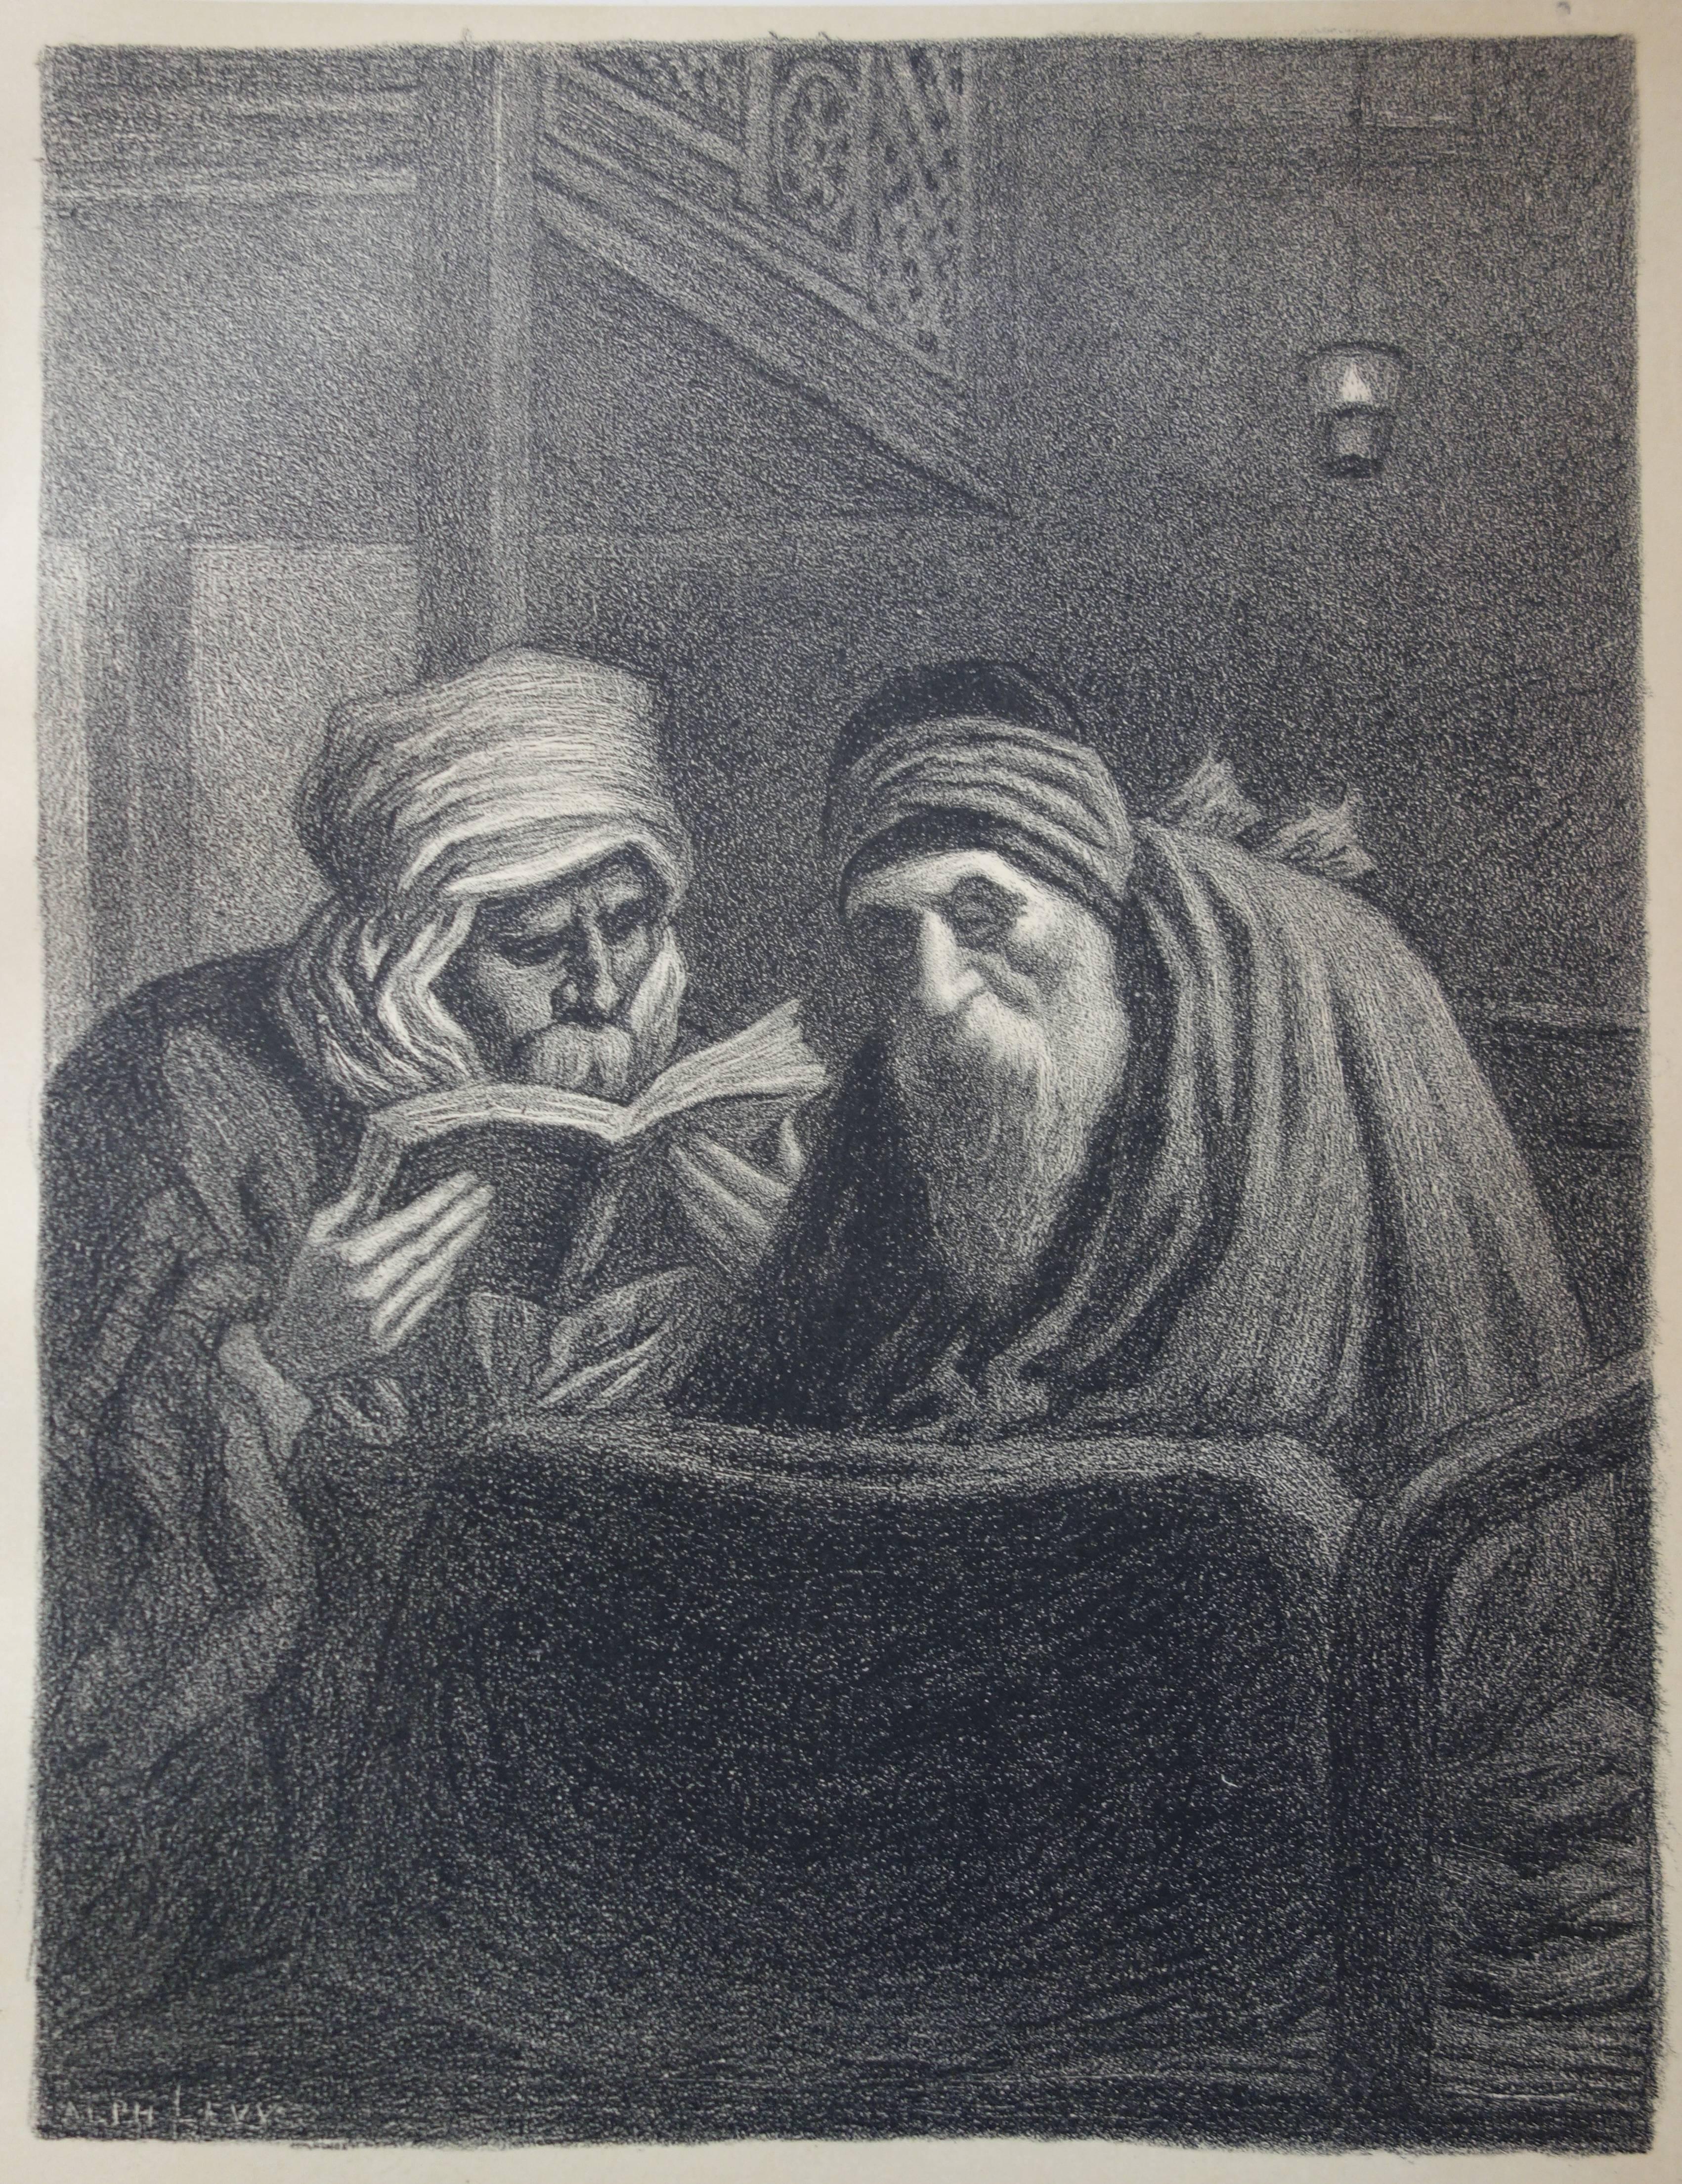 Rabbi Elisha the Blind - Original lithograph (1897/98) - Art Nouveau Print by Alphonse Levy